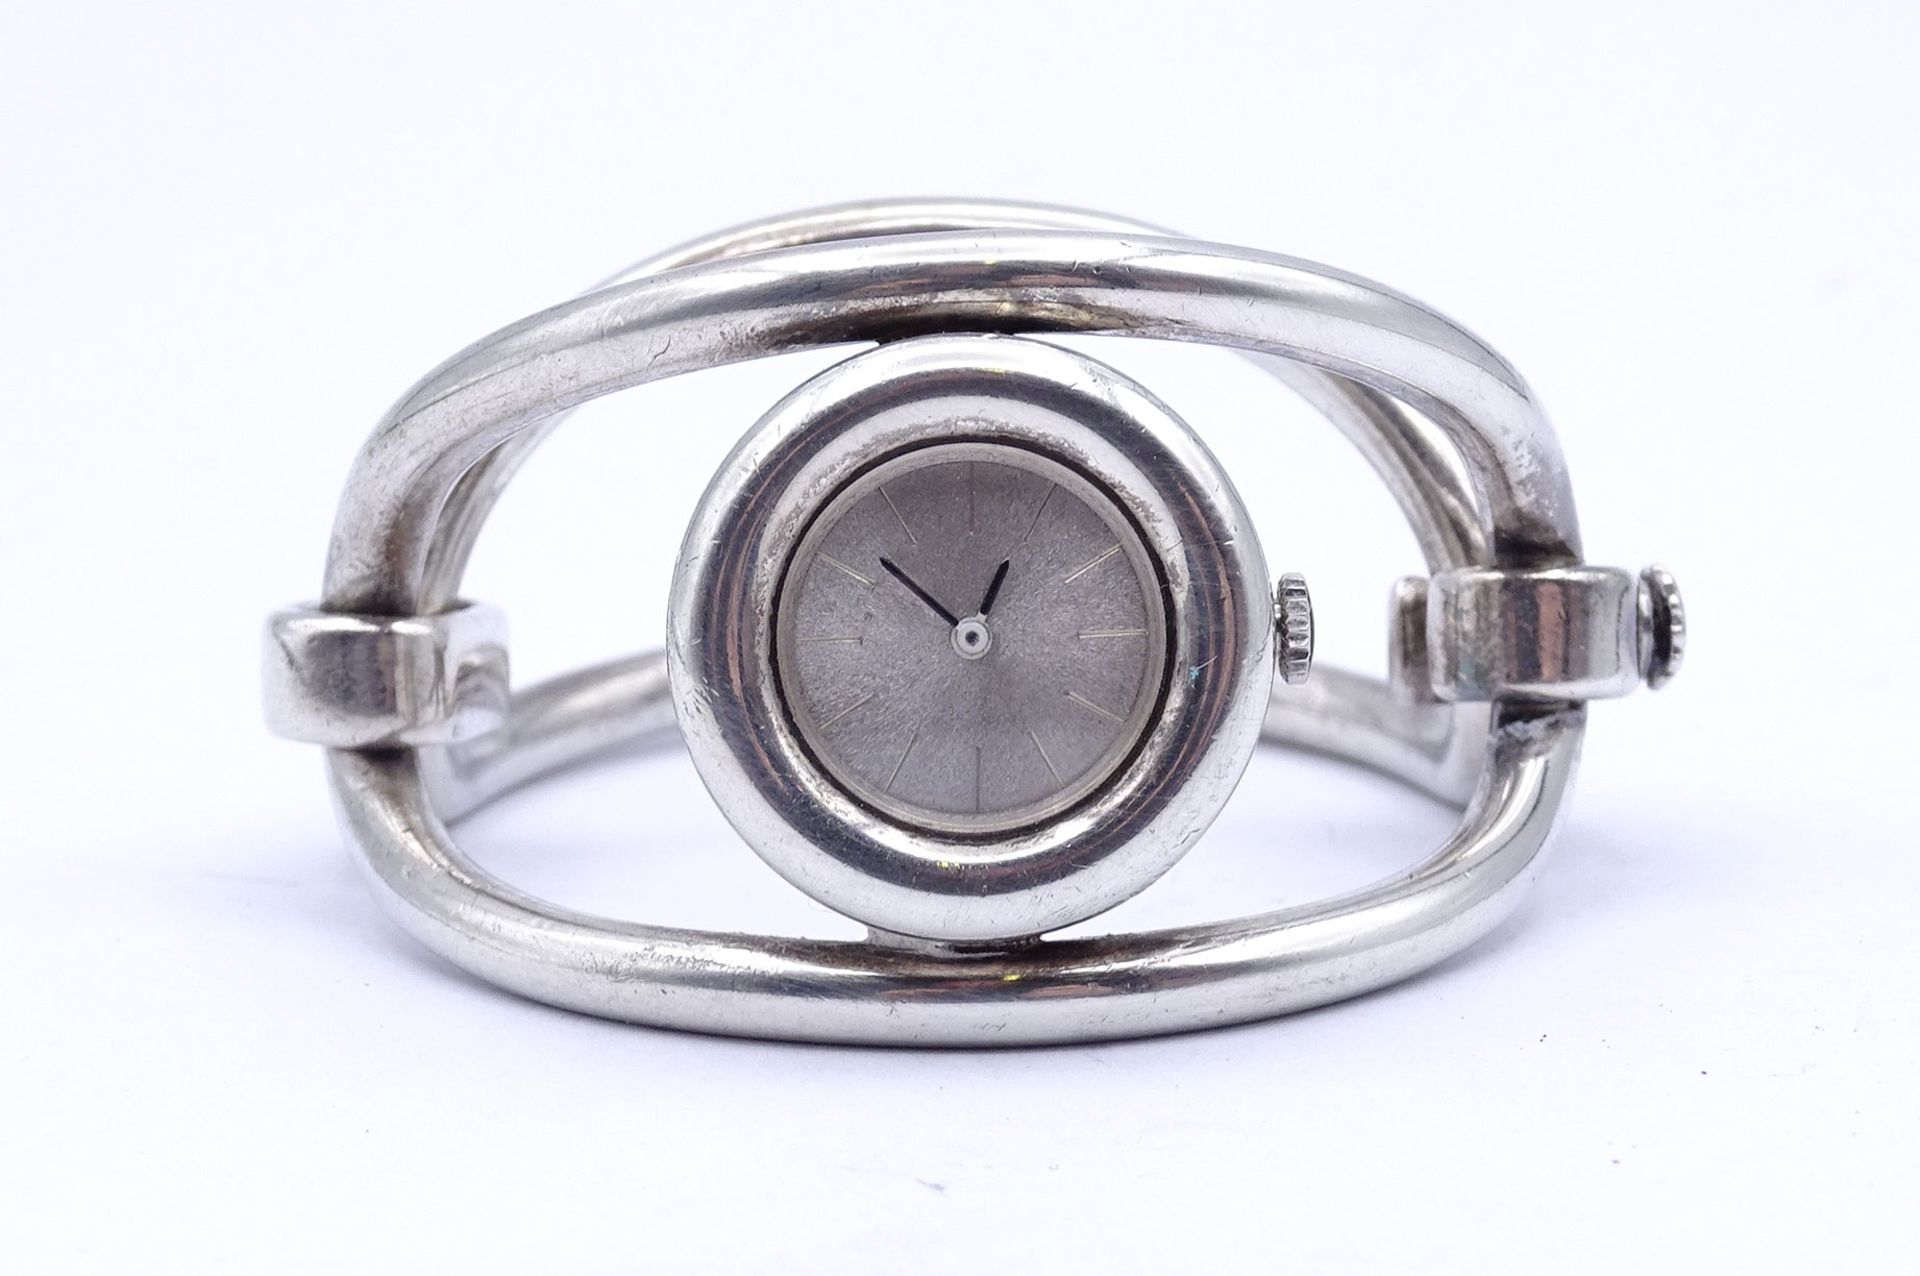 Massive Sterling Silber Armbanduhr , Markenlos, mechanisch, Werk läuft, D. 27,8mm, 106g.